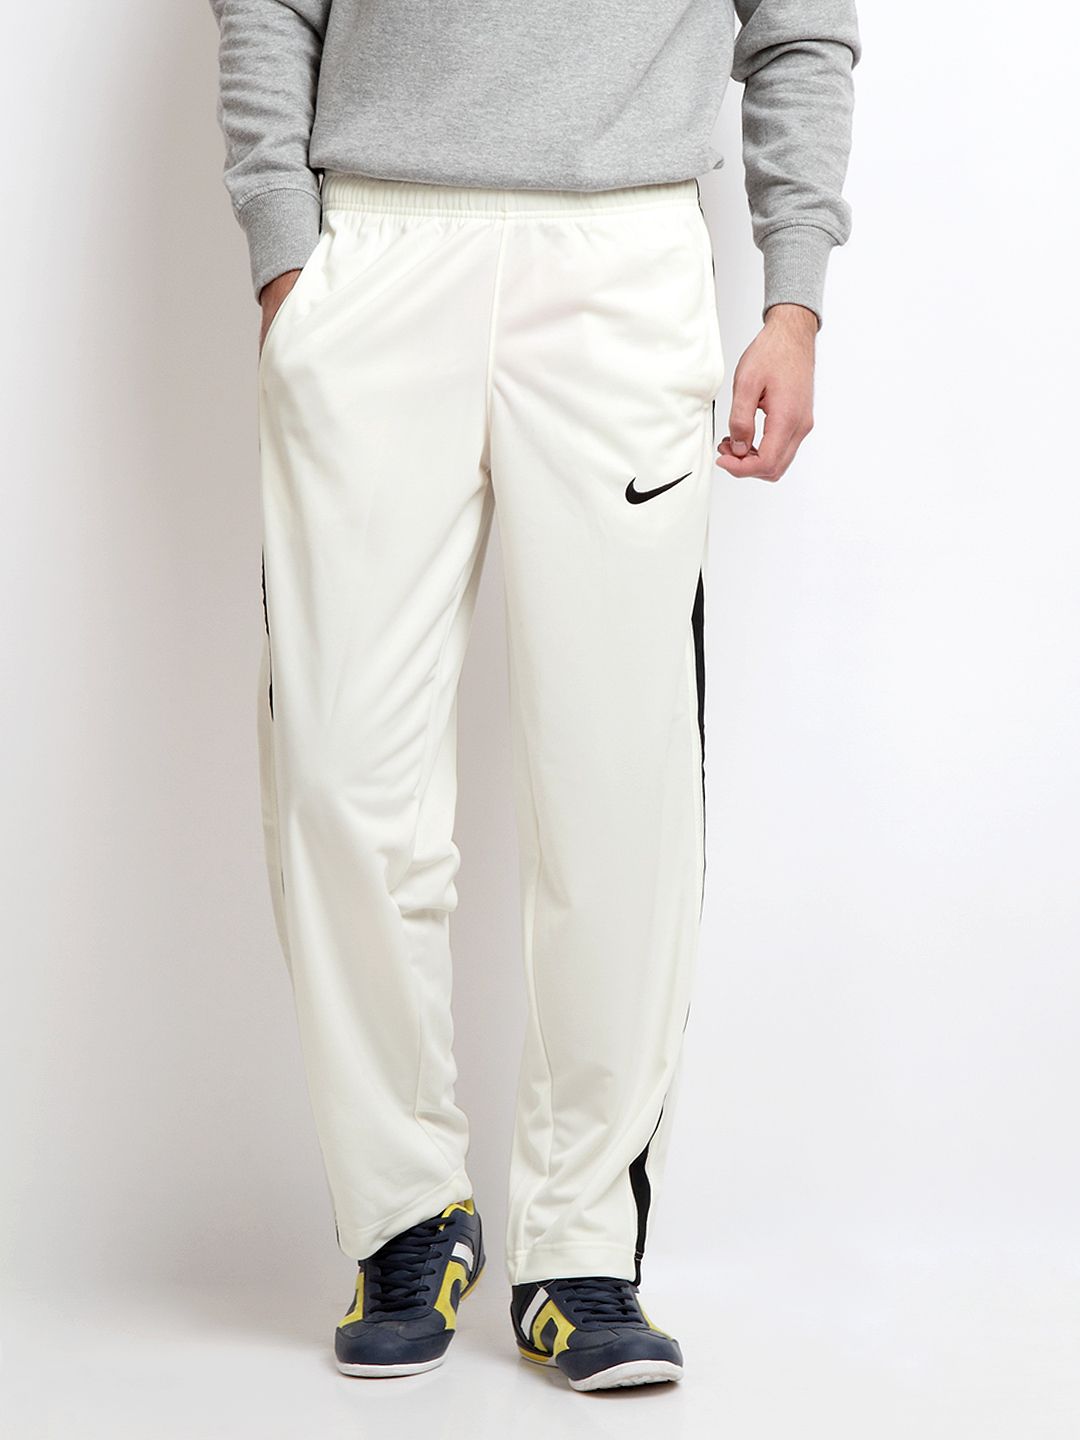 Buy Nike Men White Track Pants - Track Pants for Men | Myntra1080 x 1440